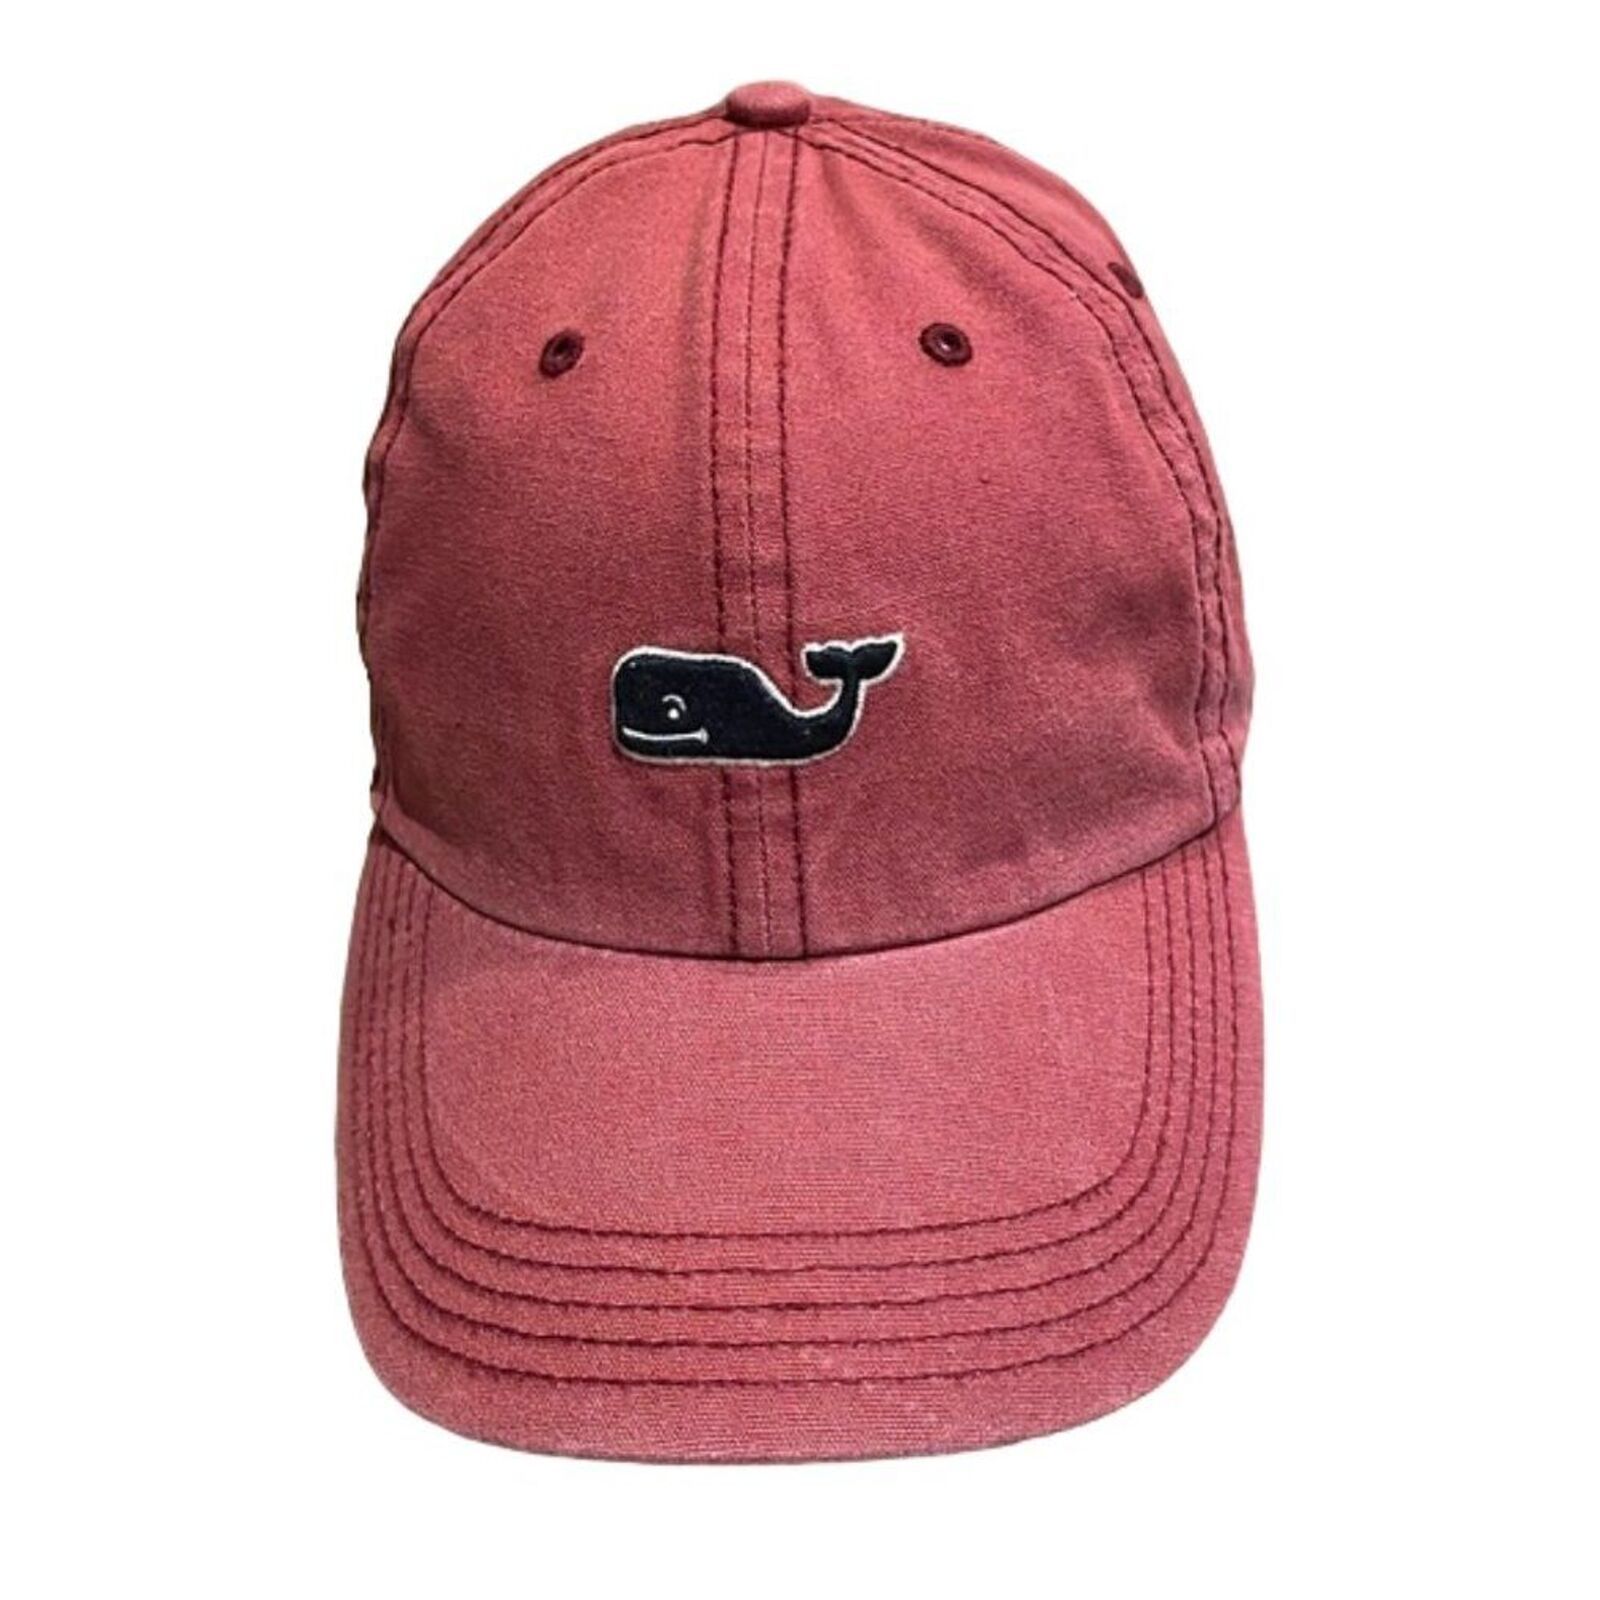 Primary image for Vineyard Vines Red Baseball Hat Cap One Size Black Logo Preppy Cotton